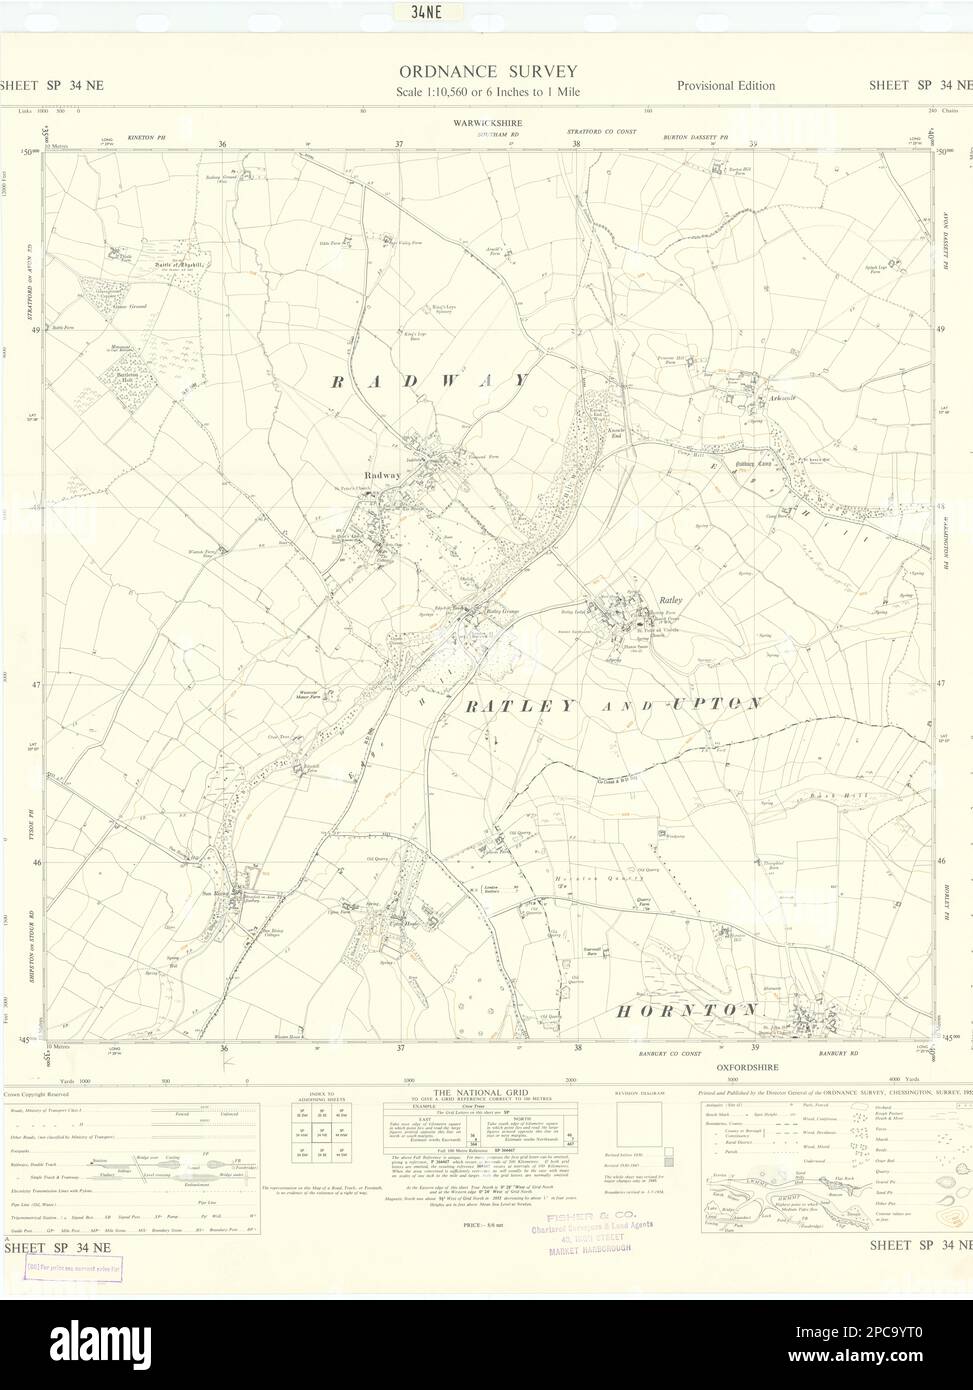 Hoja de estudio de ordnance SP34NE Warwickshire Radway Ratley Hornton 1955 mapa antiguo Foto de stock